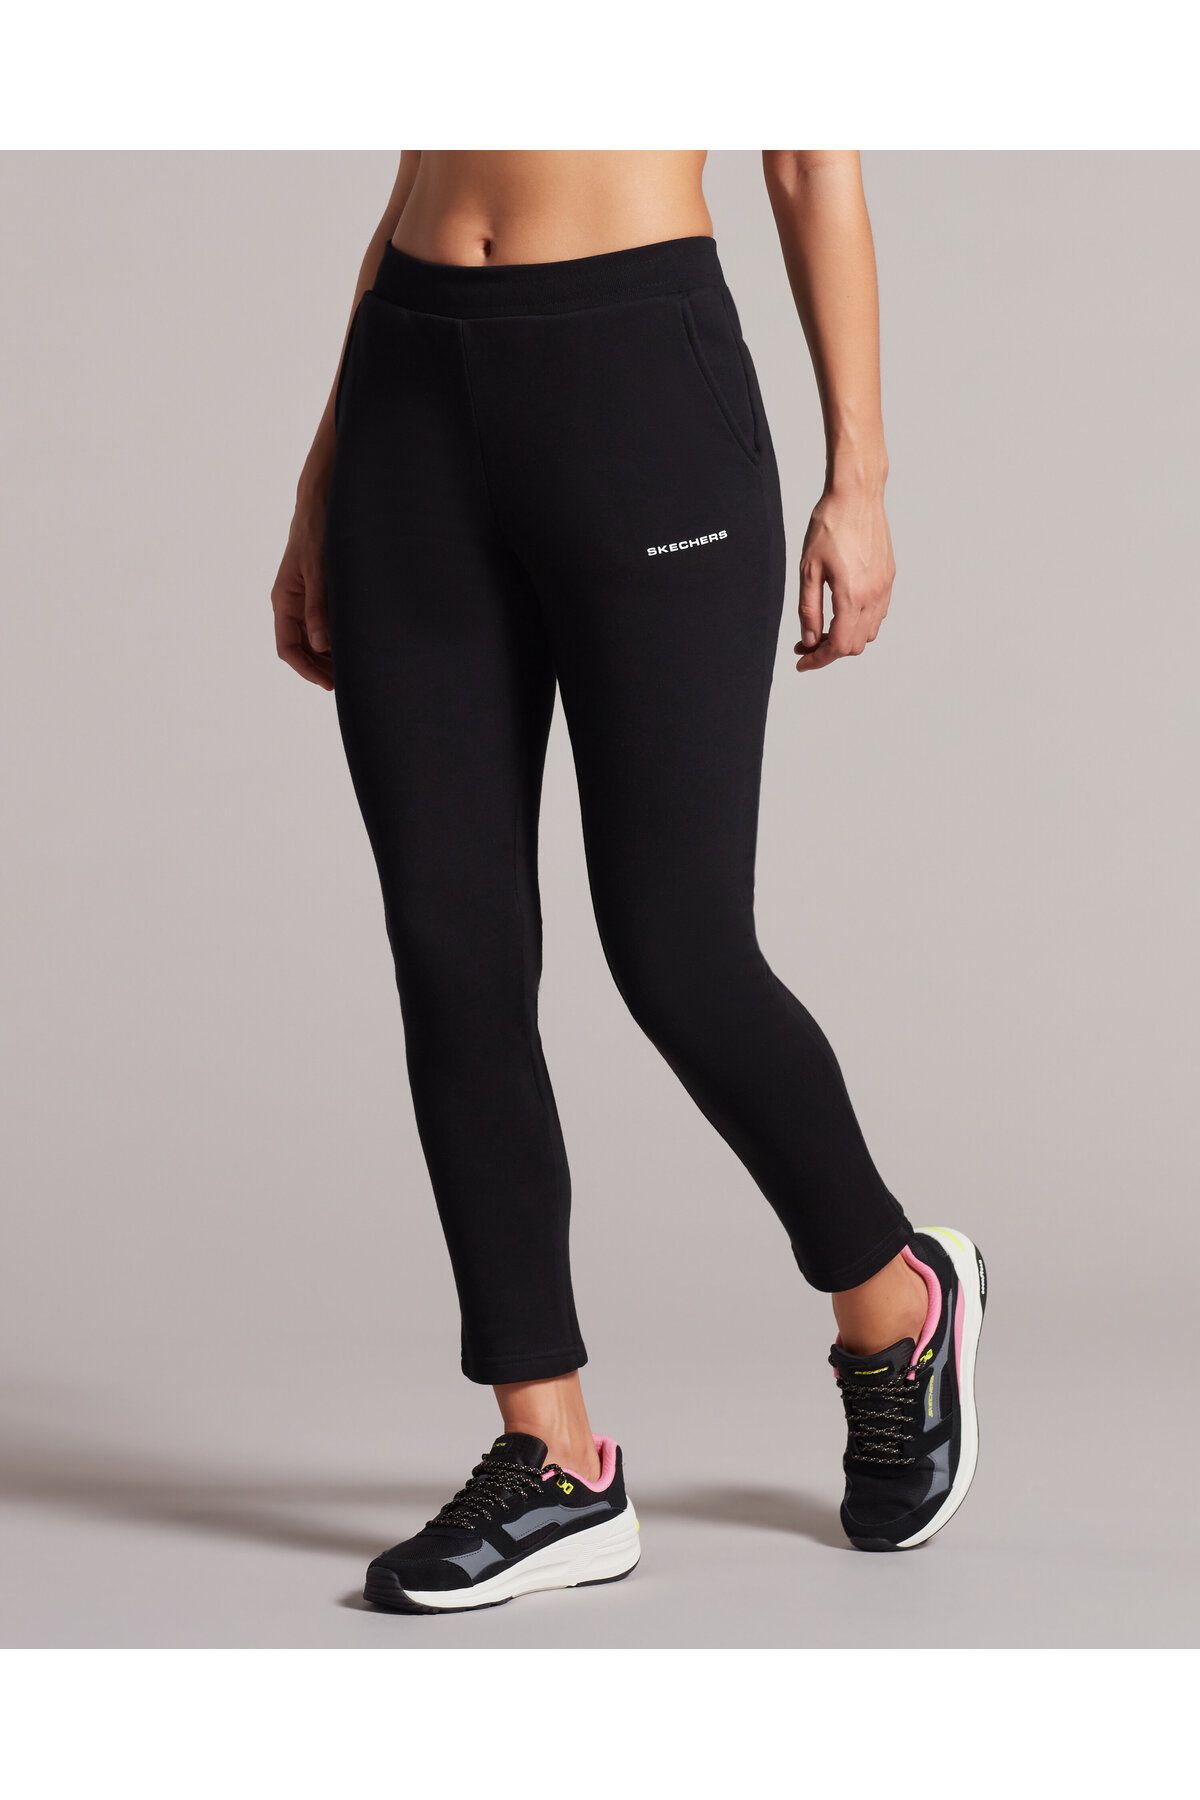 Skechers W New Basics Slim Sweatpant Kadın Siyah Eşofman Altı S212185-001